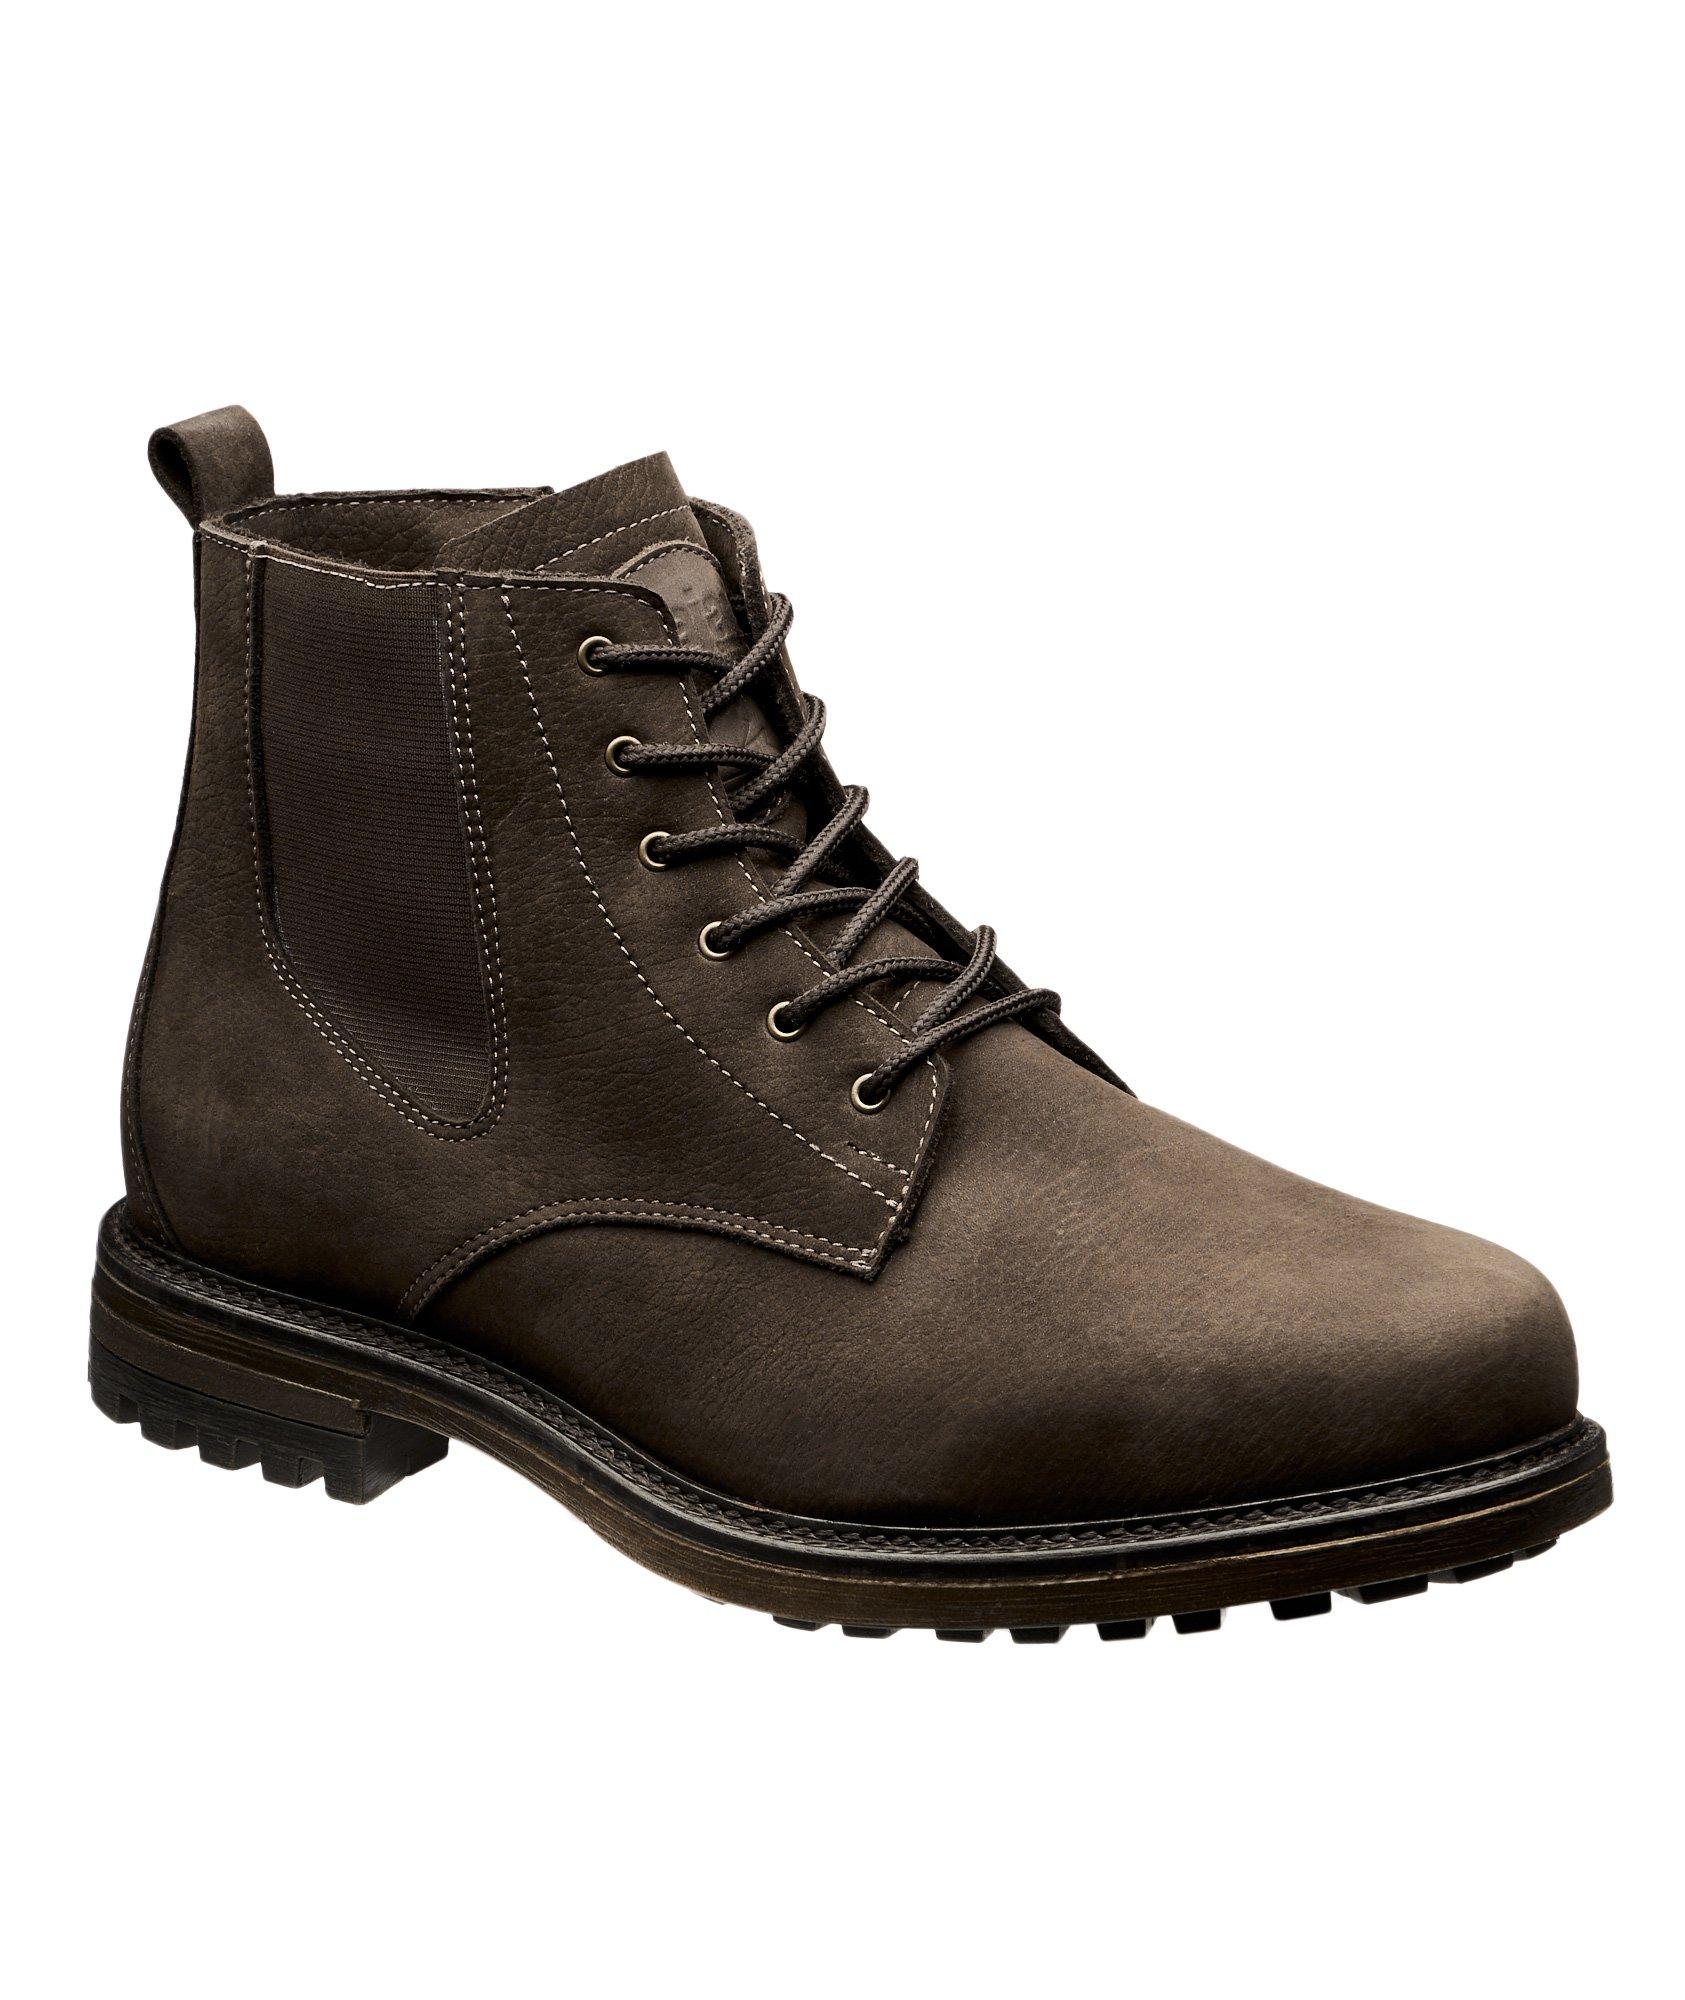 George Sheepskin Leather Boots image 0